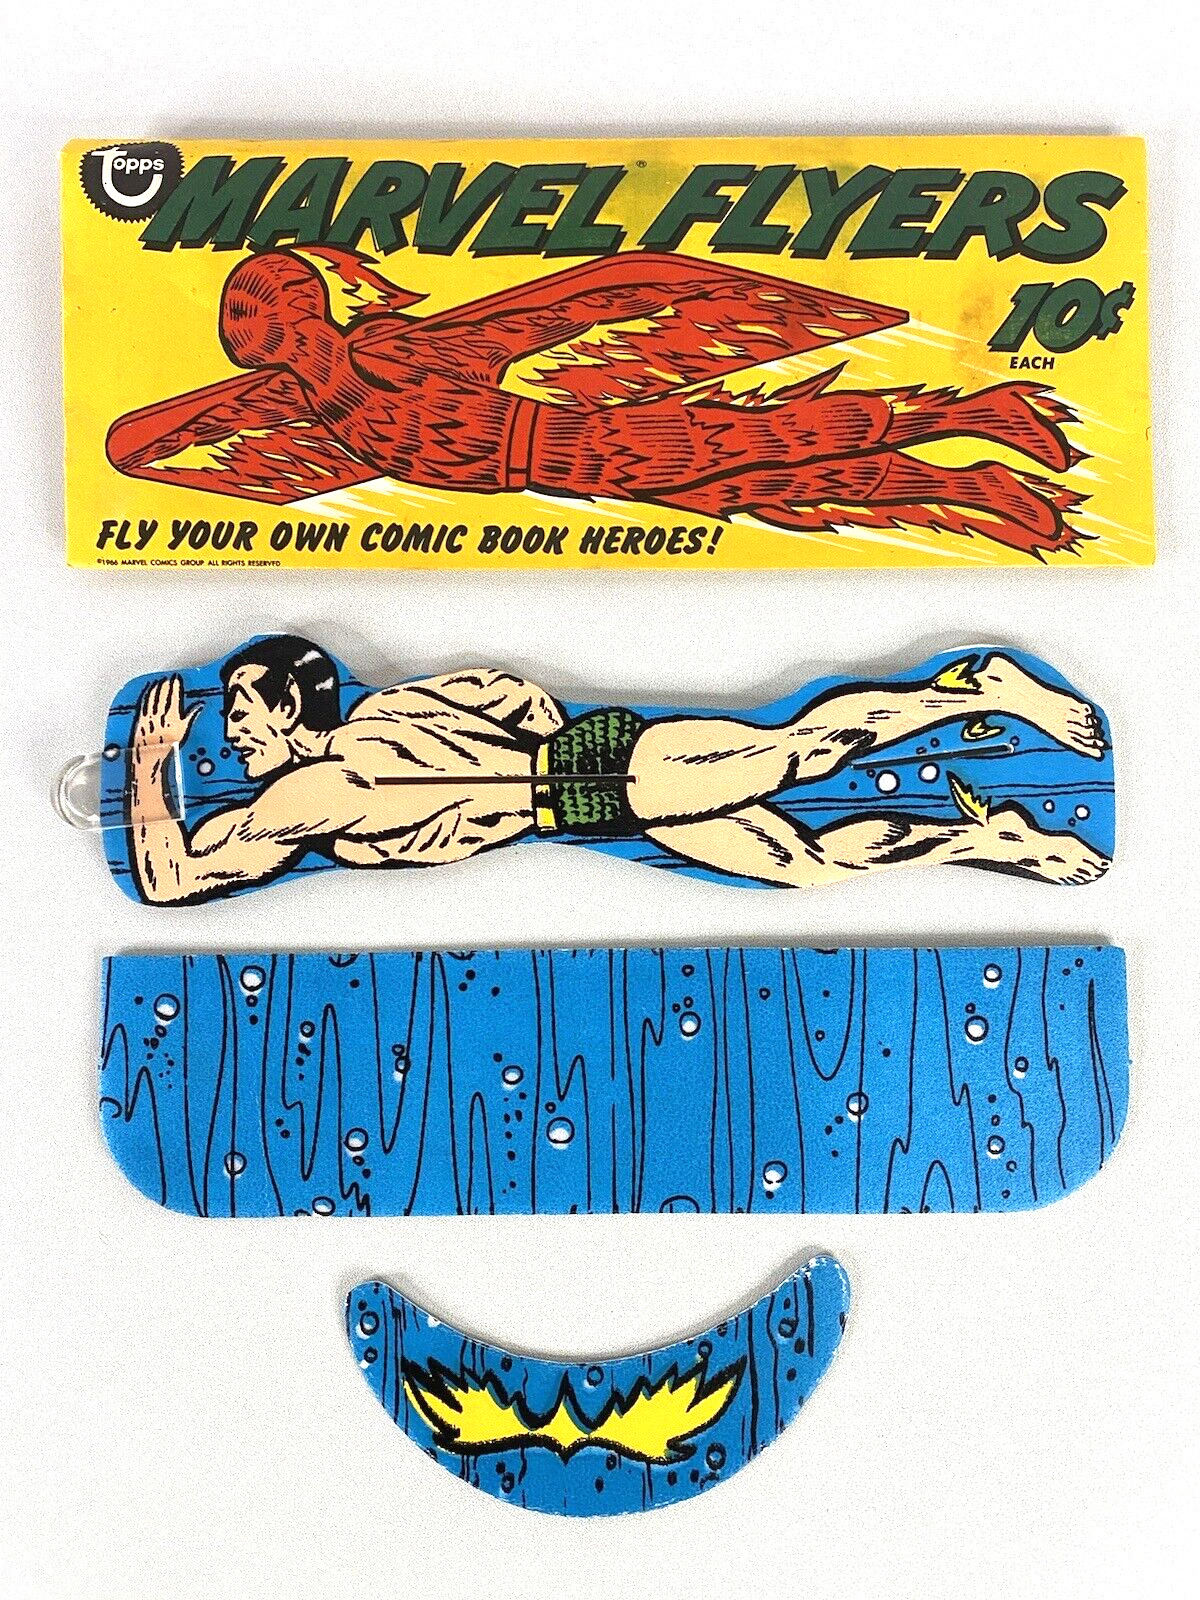 VTG 1966 Topps Marvel Flyers SUB MARINER Comic Book Super Heroes IN PACKAGING